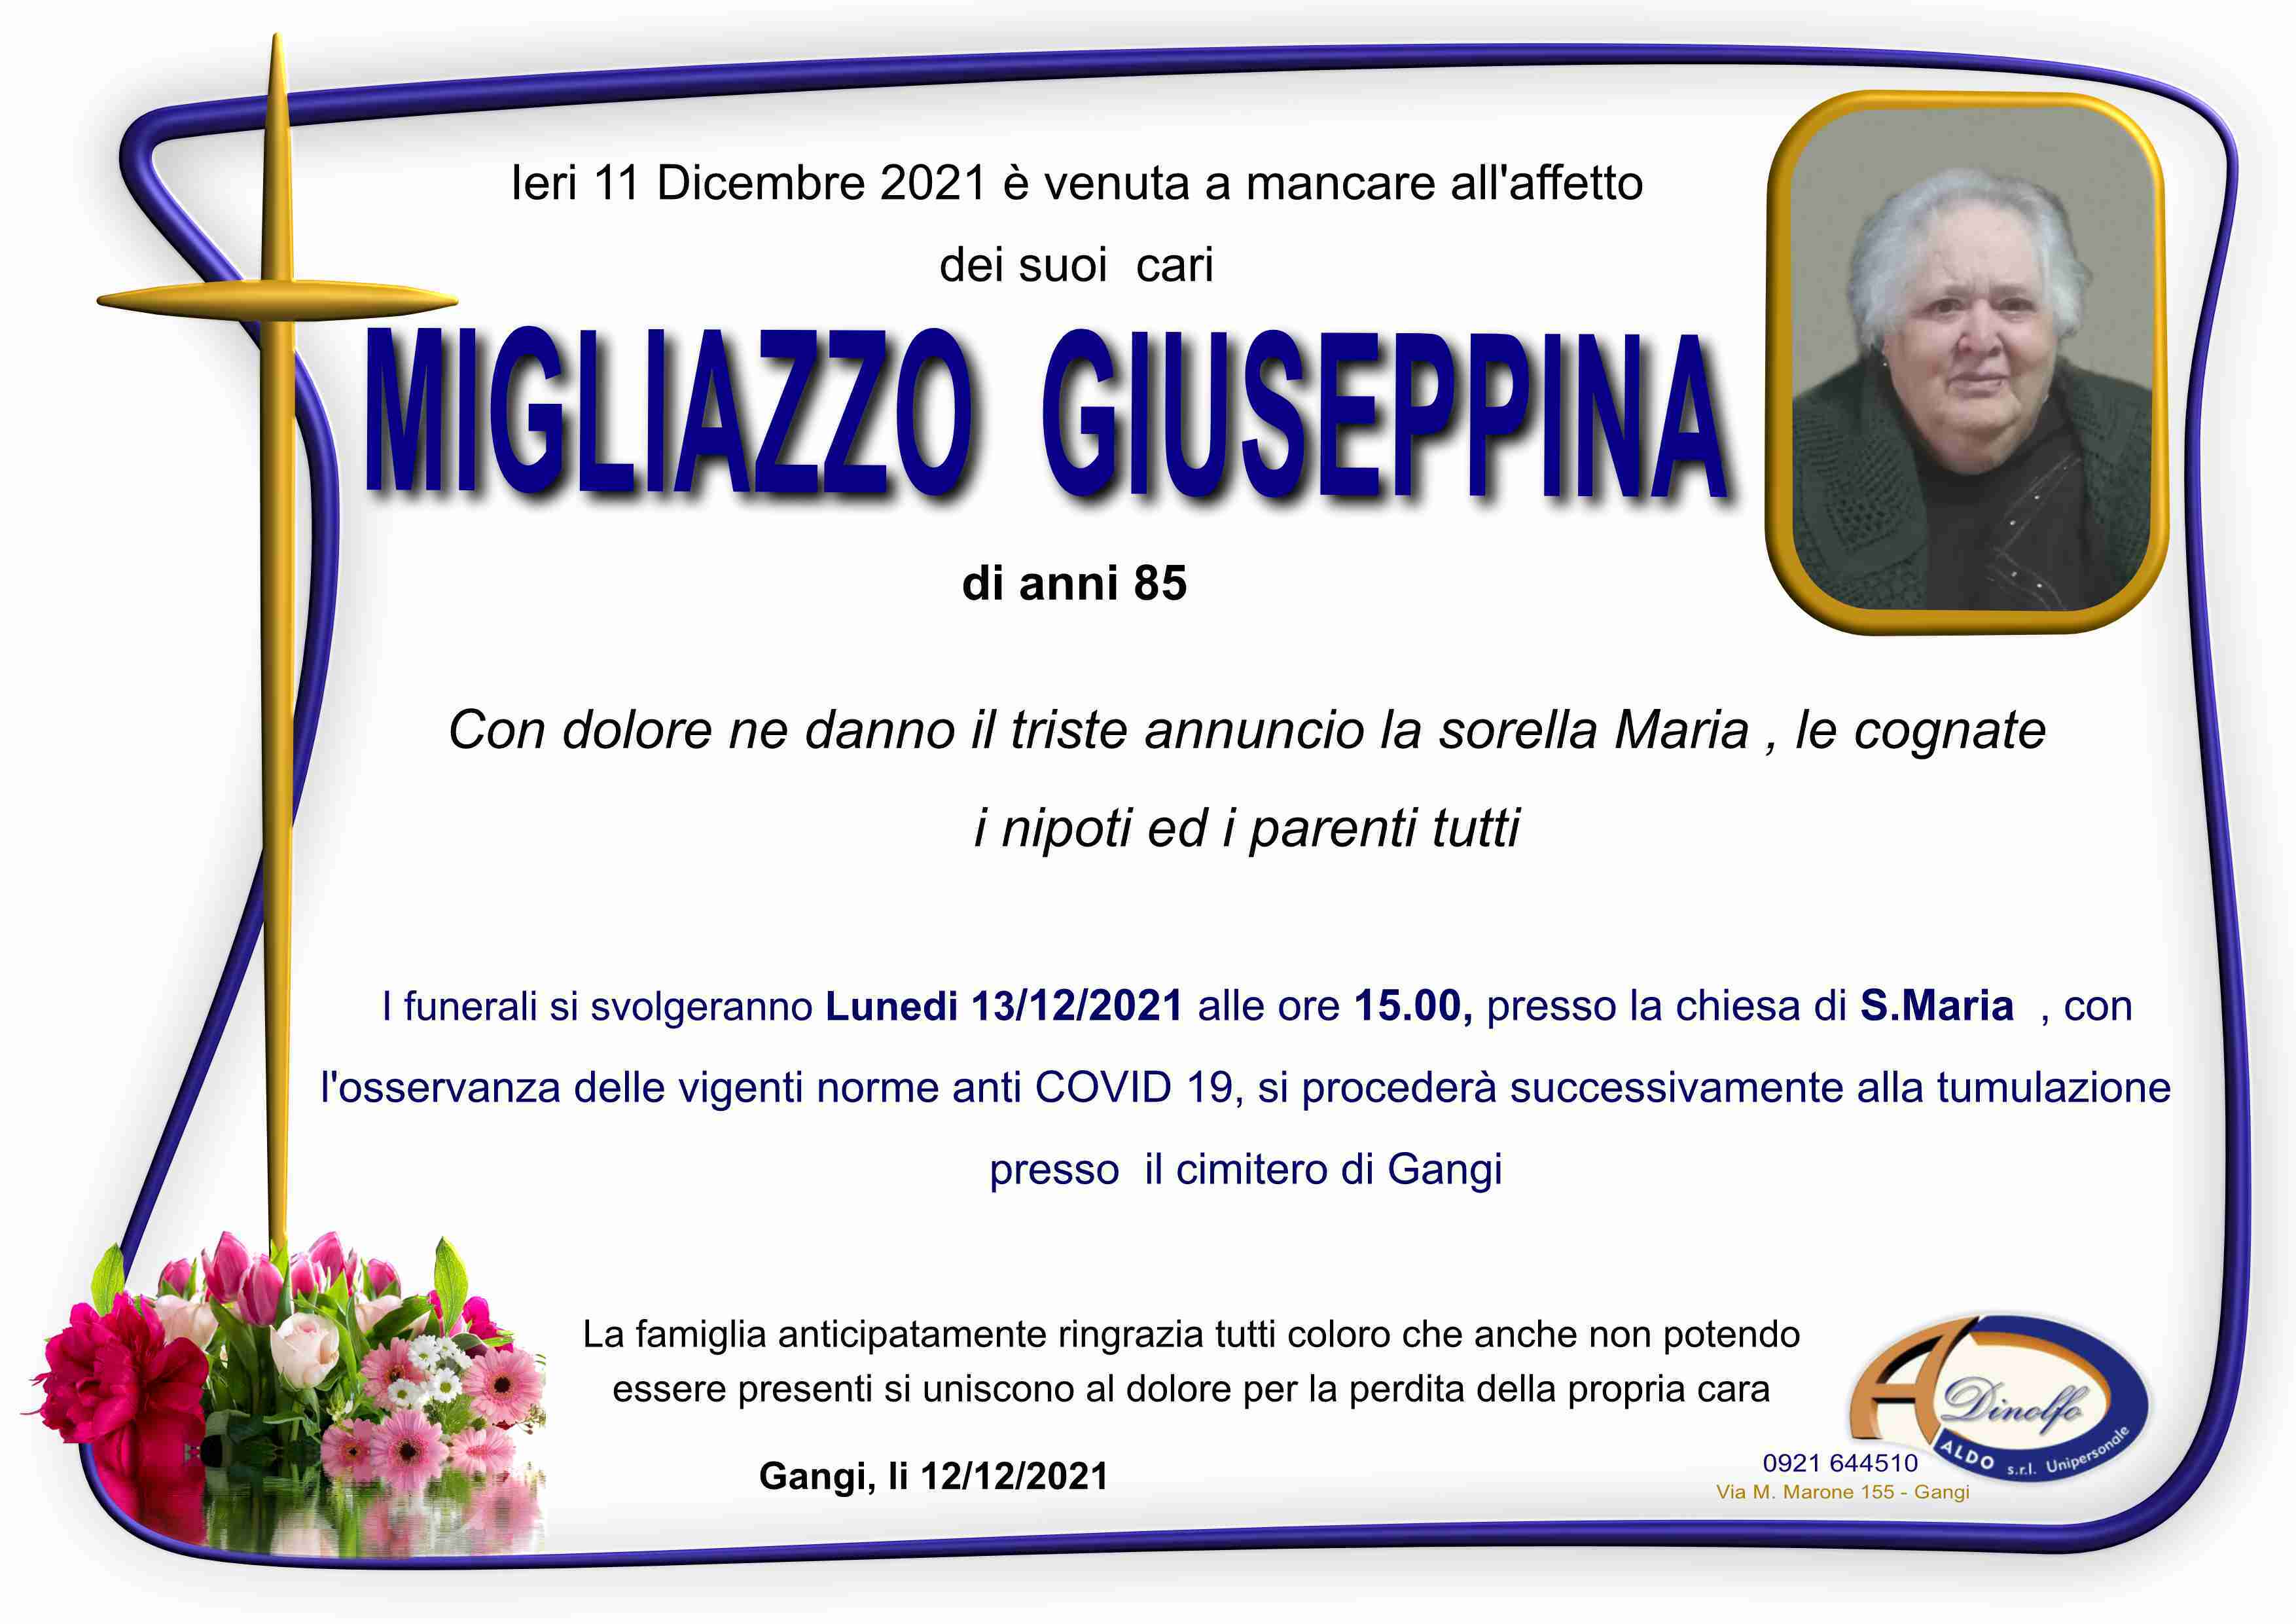 Giuseppina Migliazzo